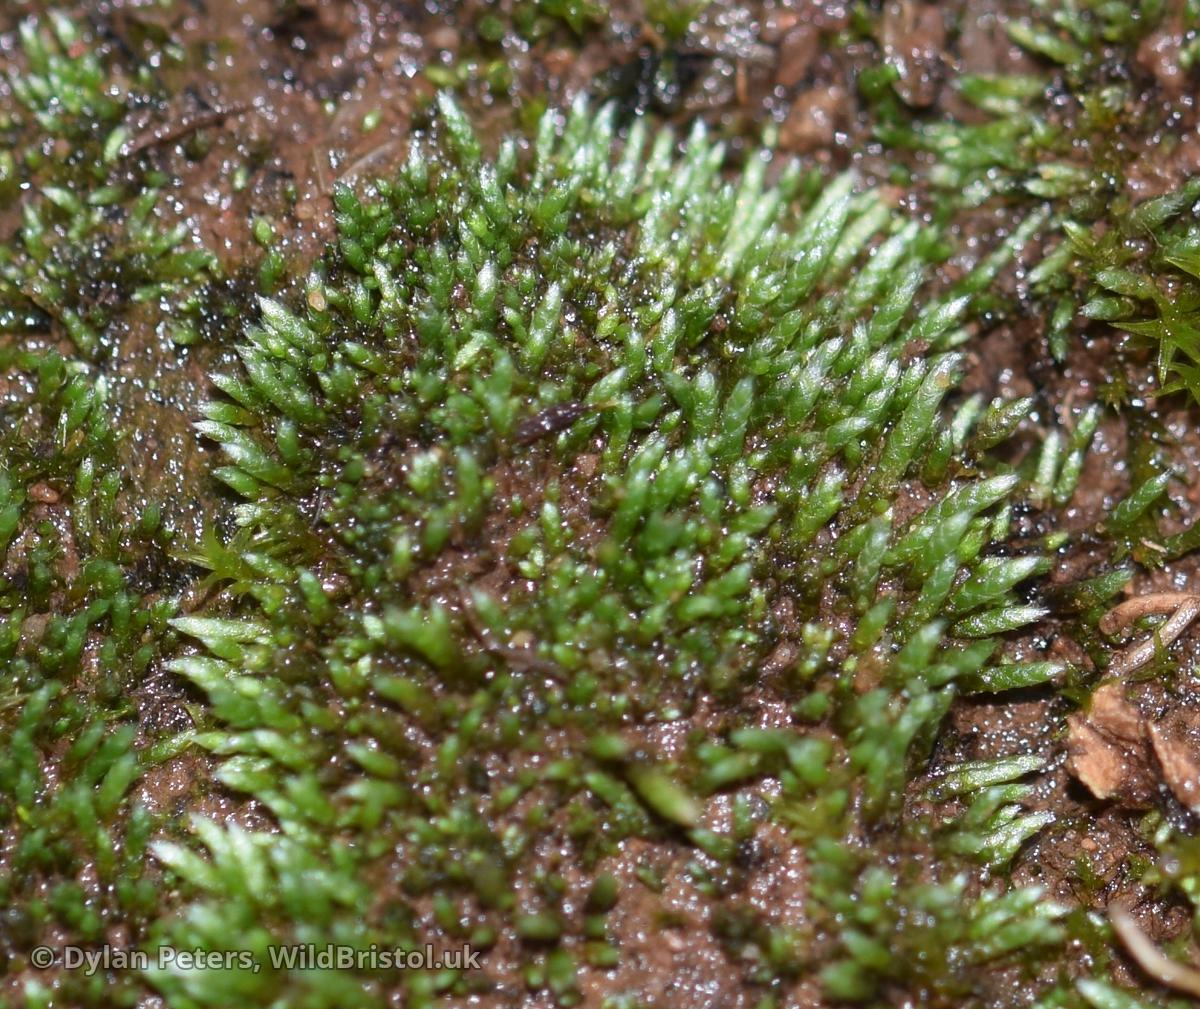 https://wildbristol.uk/groups/ferns-horsetails-mosses-liverworts/silver-moss/